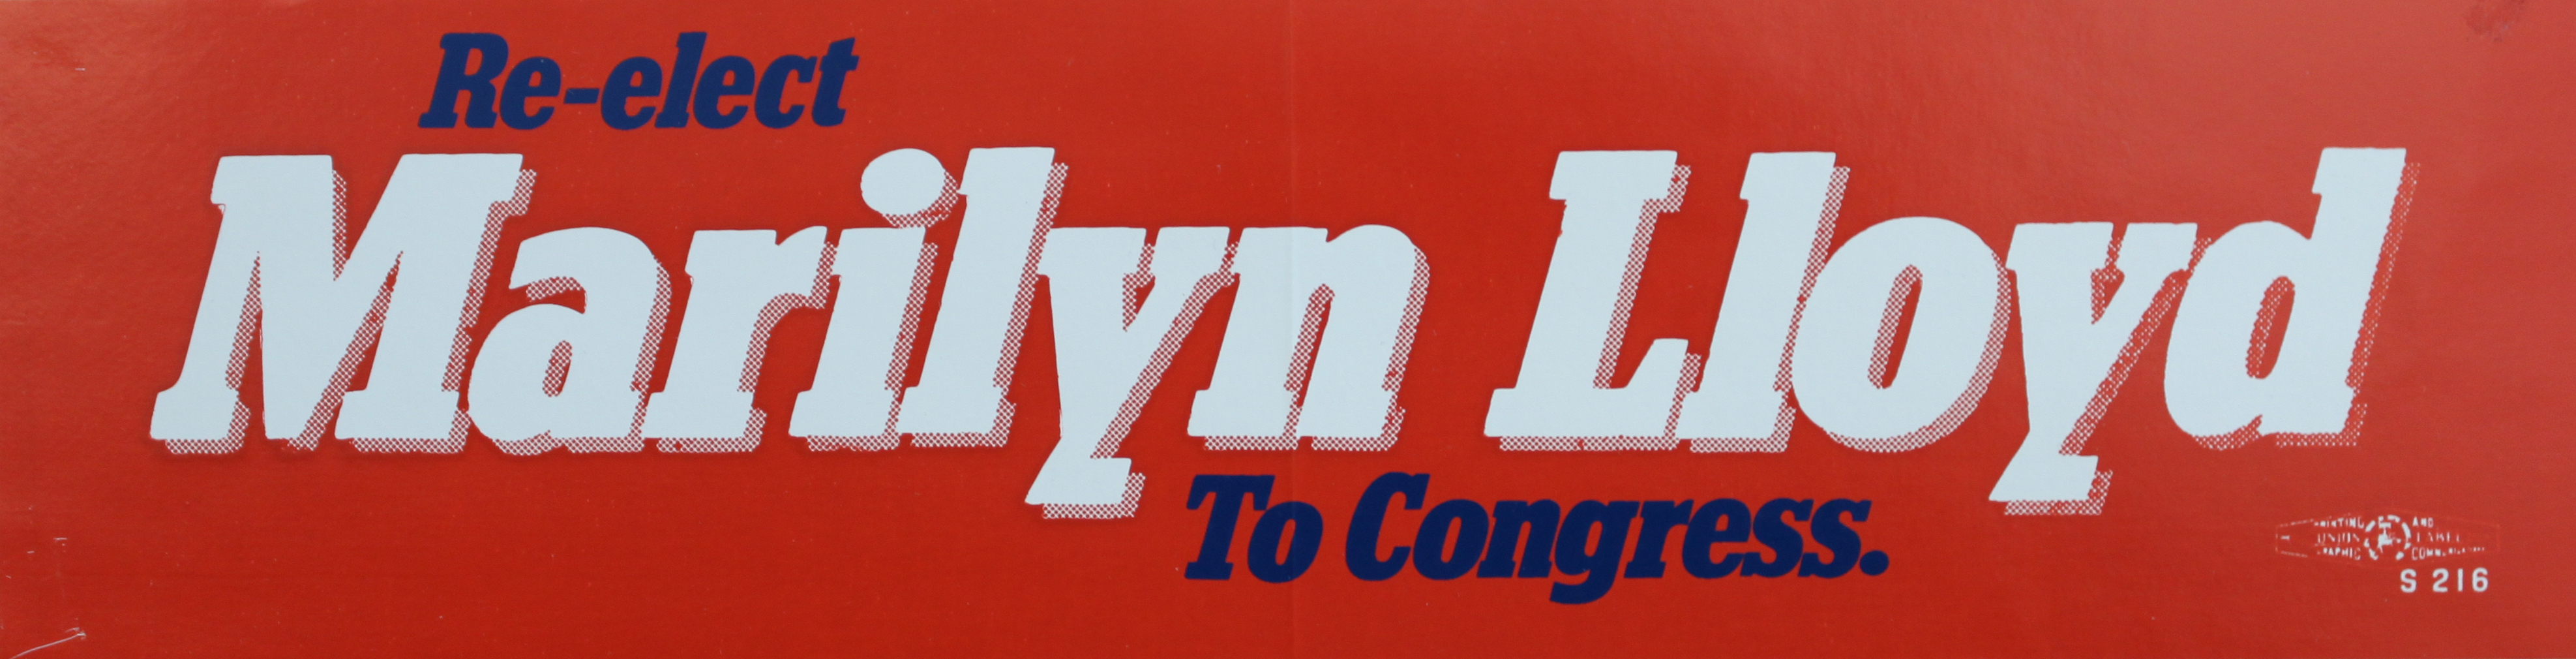 Re-elect Marilyn Lloyd to Congress